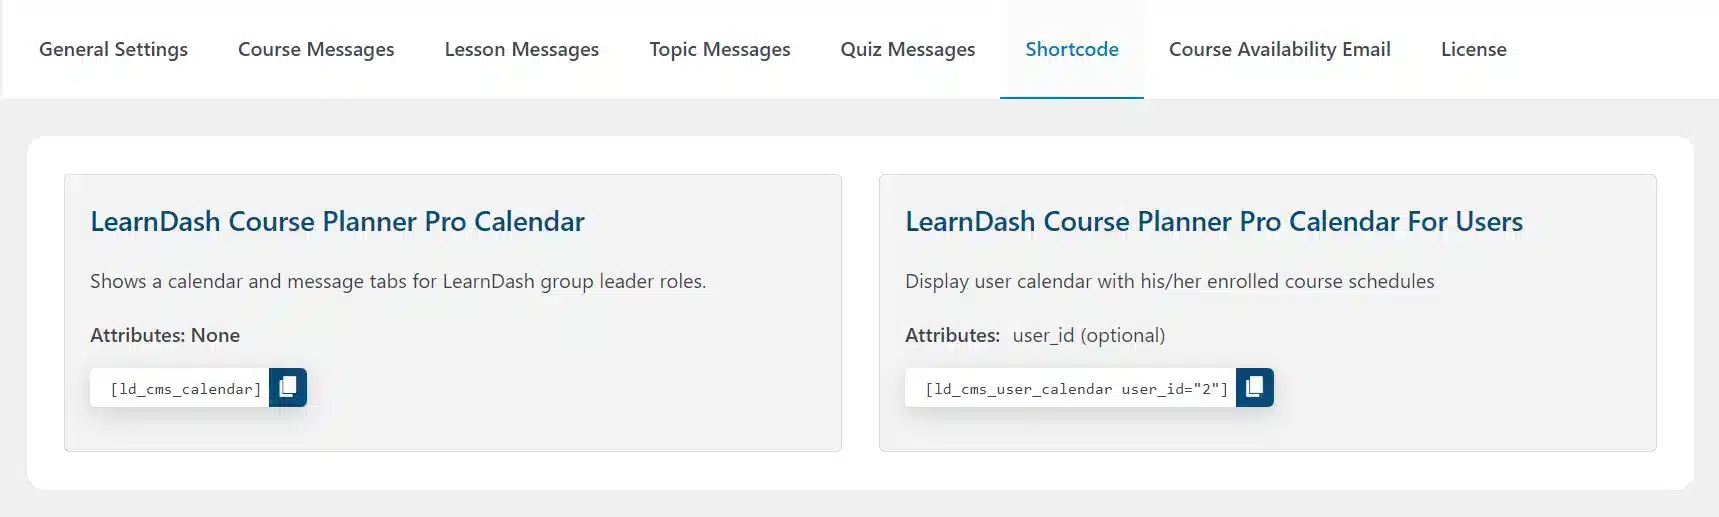 LearnDash-Course-Planner-Pro-Shortcode.png.webp